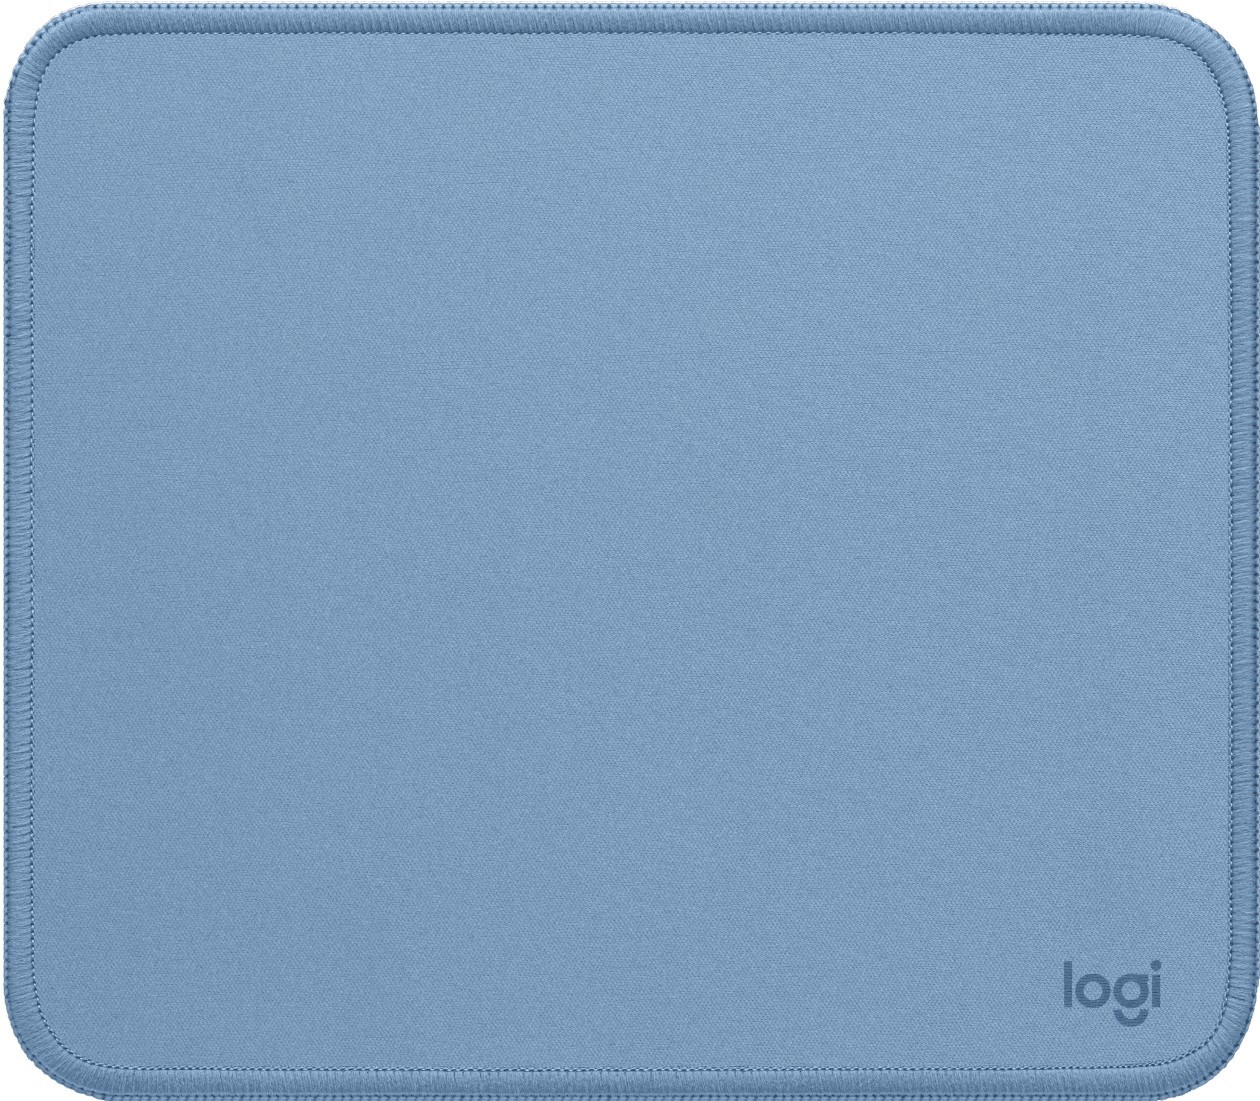 Logitech Mouse Pad Studio Series Blue Grey